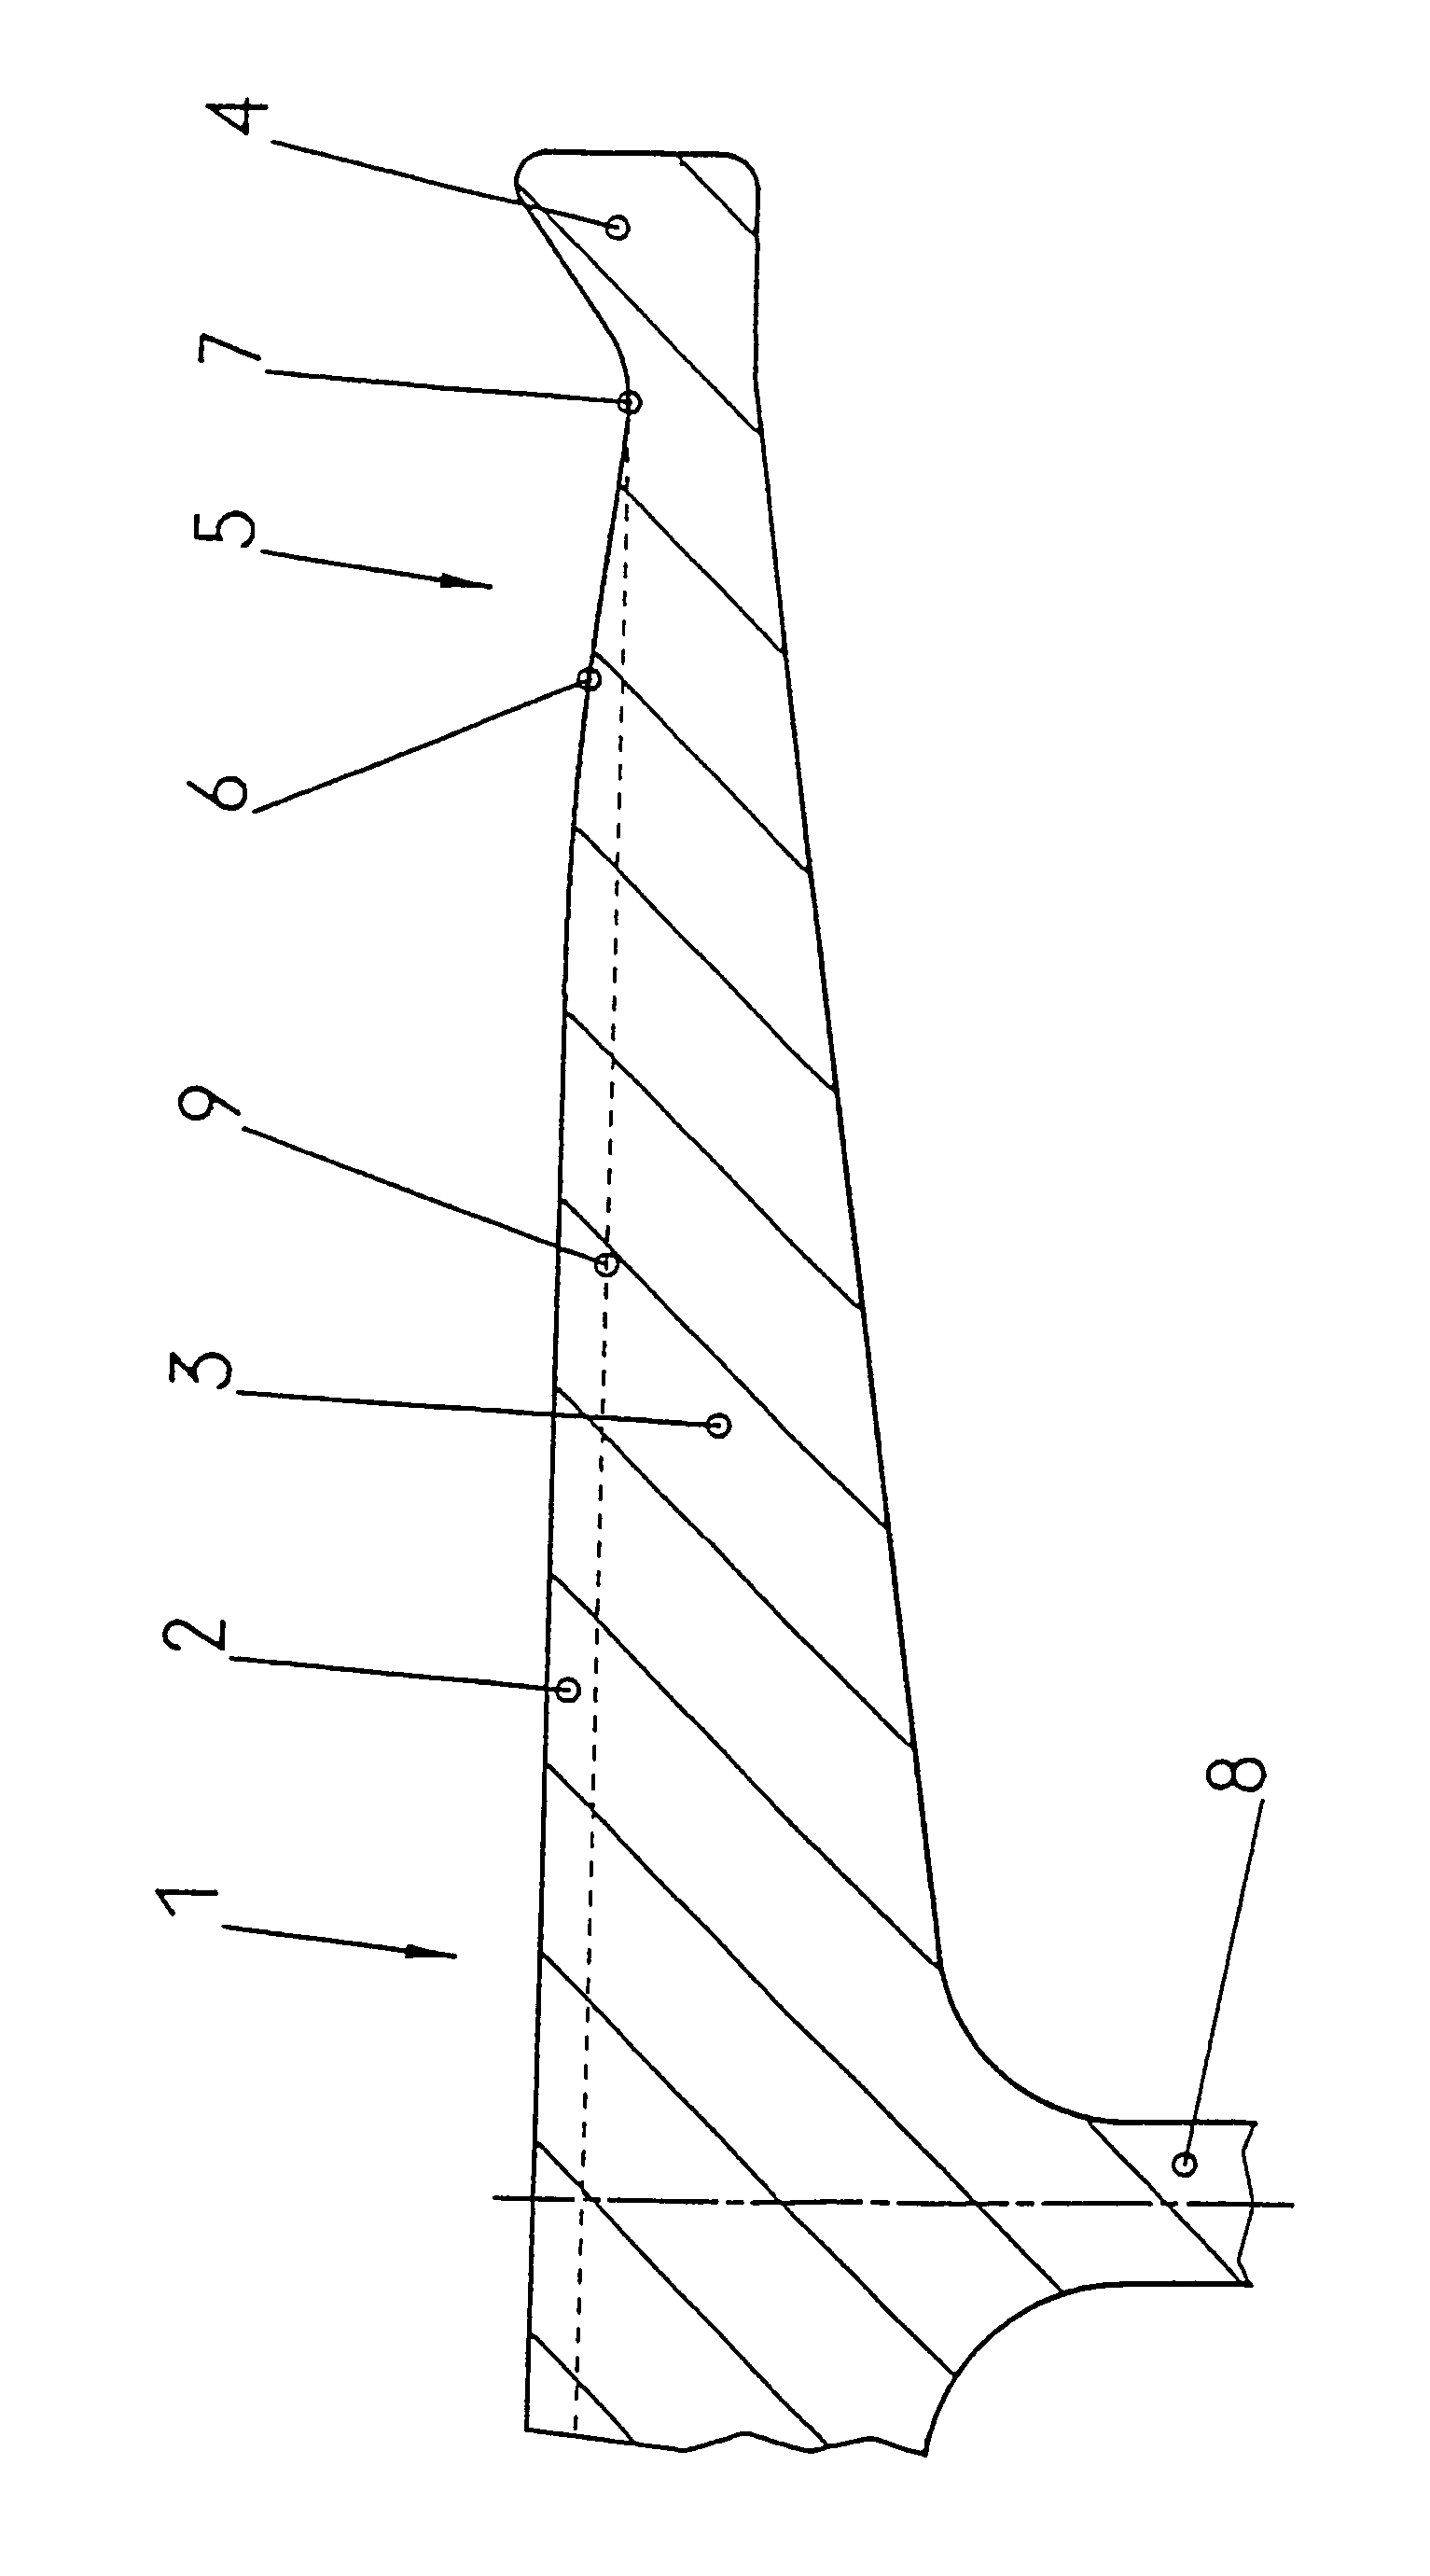 Double T-shaped steel sheet piling profile